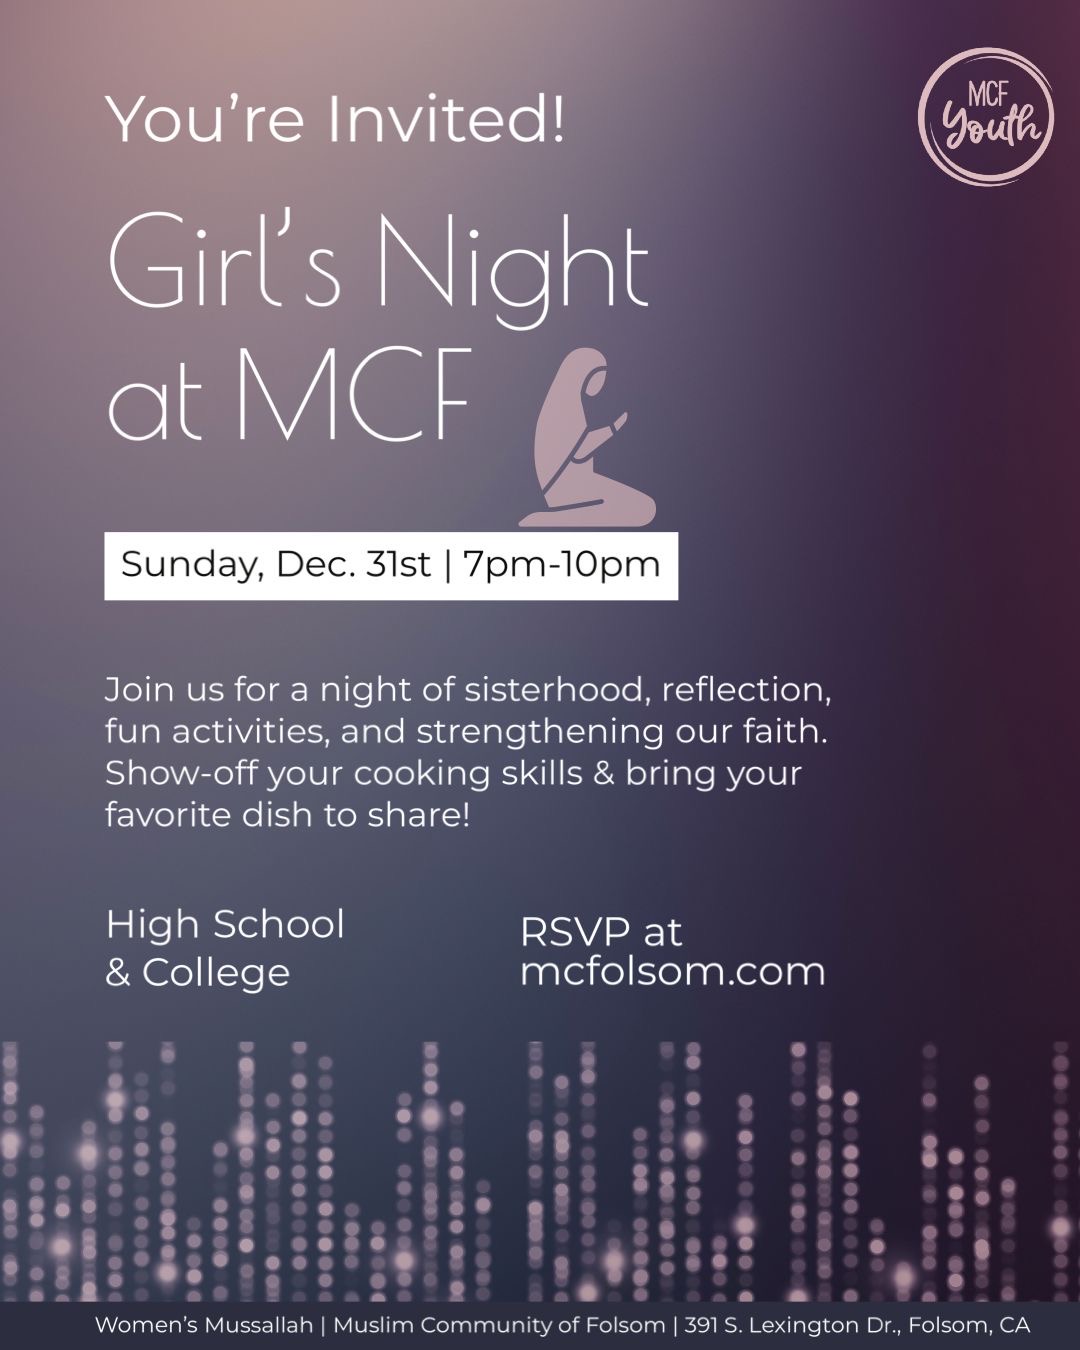 Girl's Night at MCF